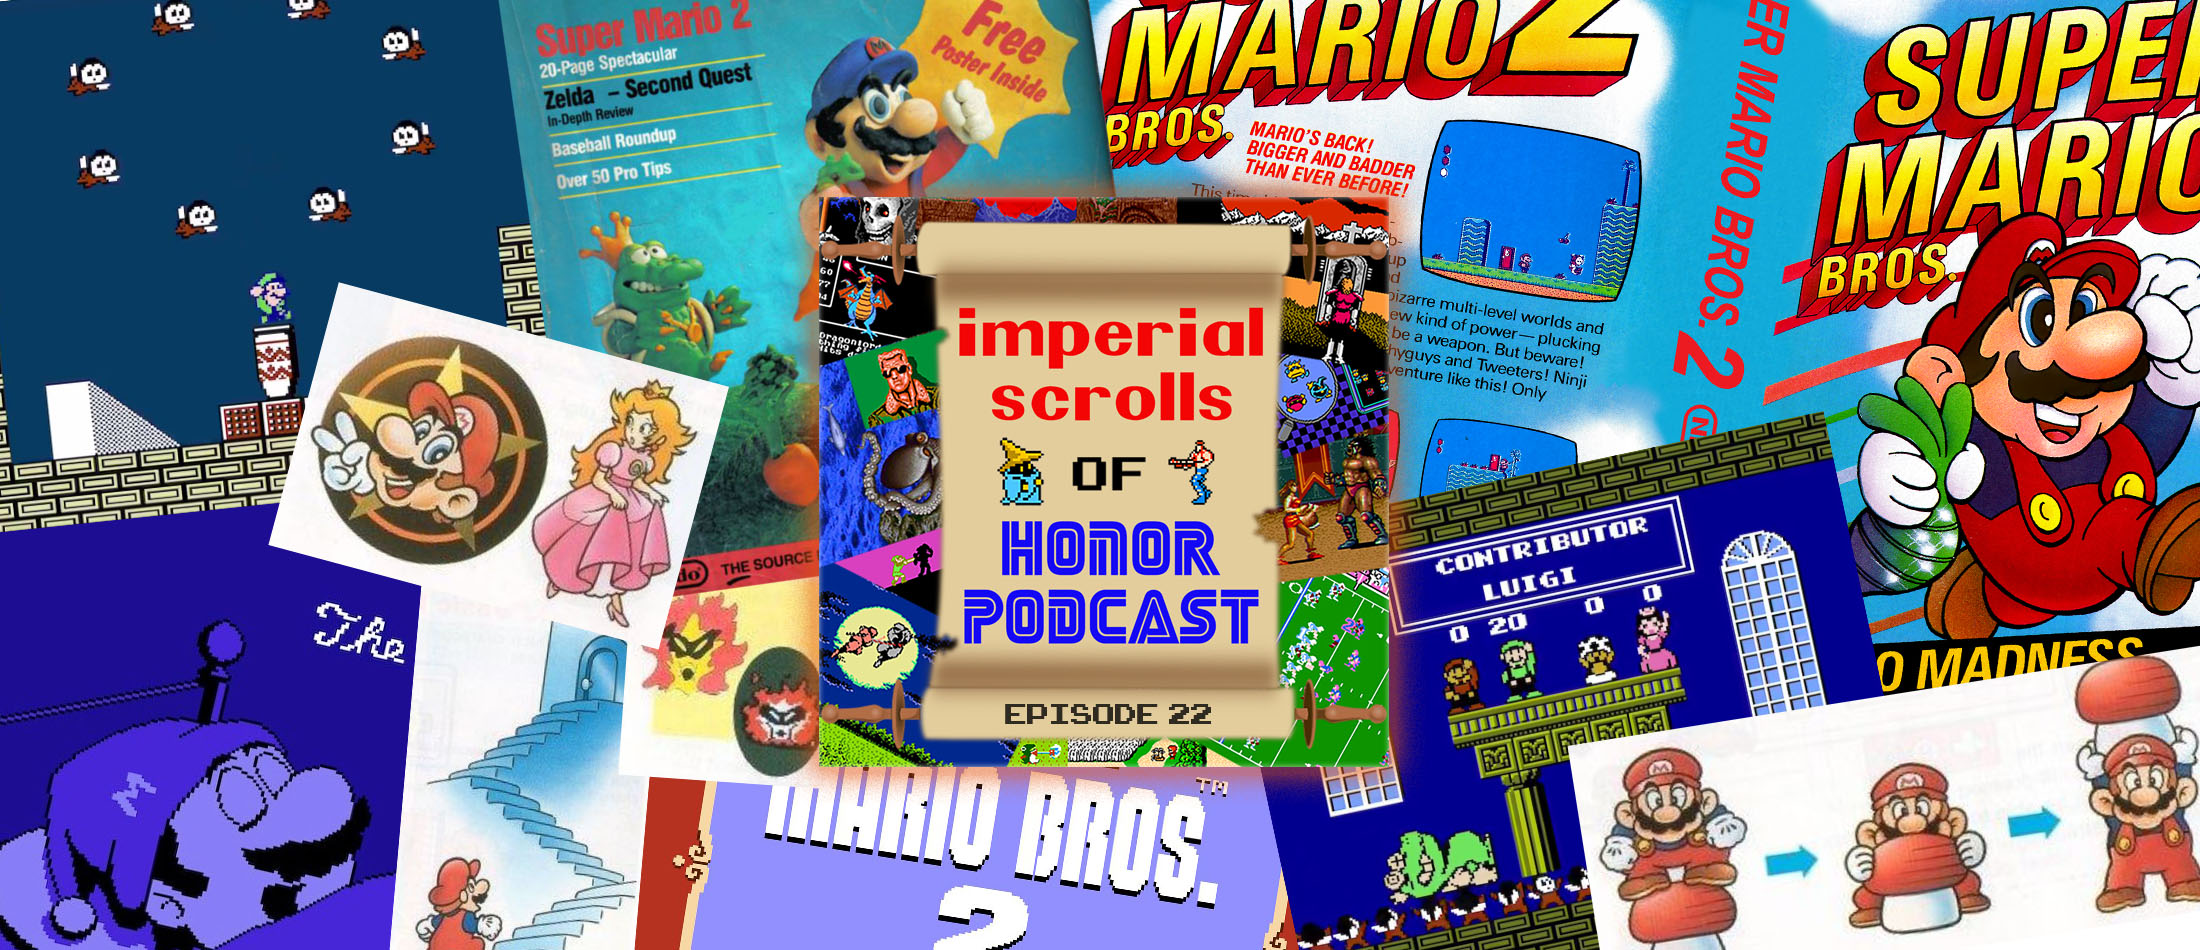 Imperial Scrolls of Honor Podcast - Episode 22 - Super Mario Bros. 2 (NES)